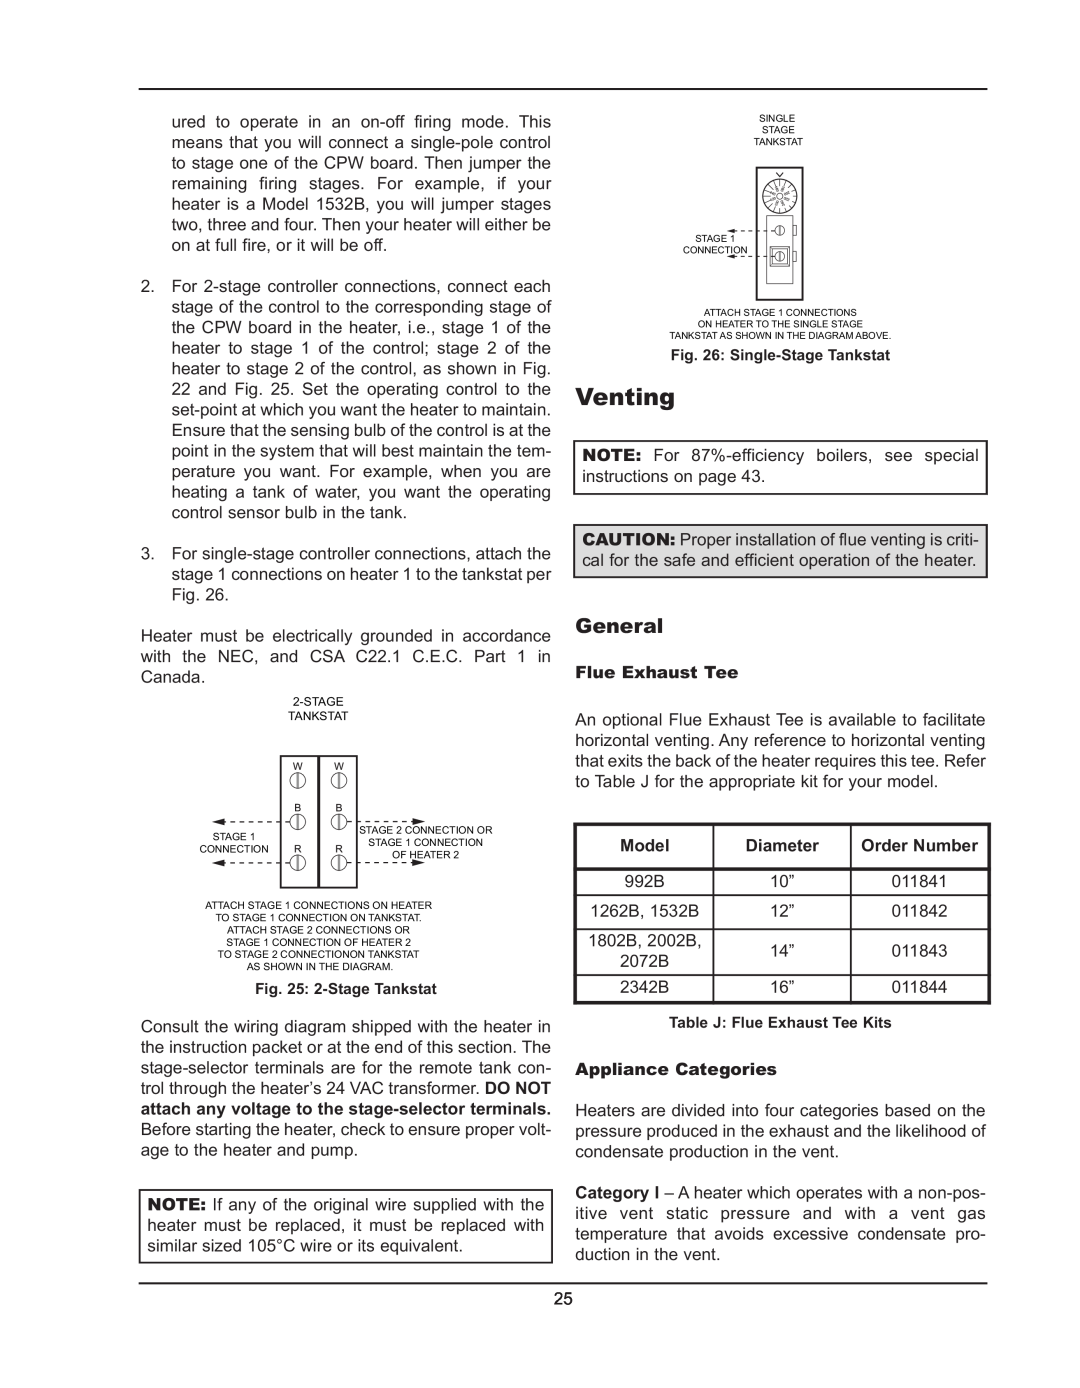 Raypak 992B manual Venting, Flue Exhaust Tee, Model, Diameter, Order Number, Appliance Categories 